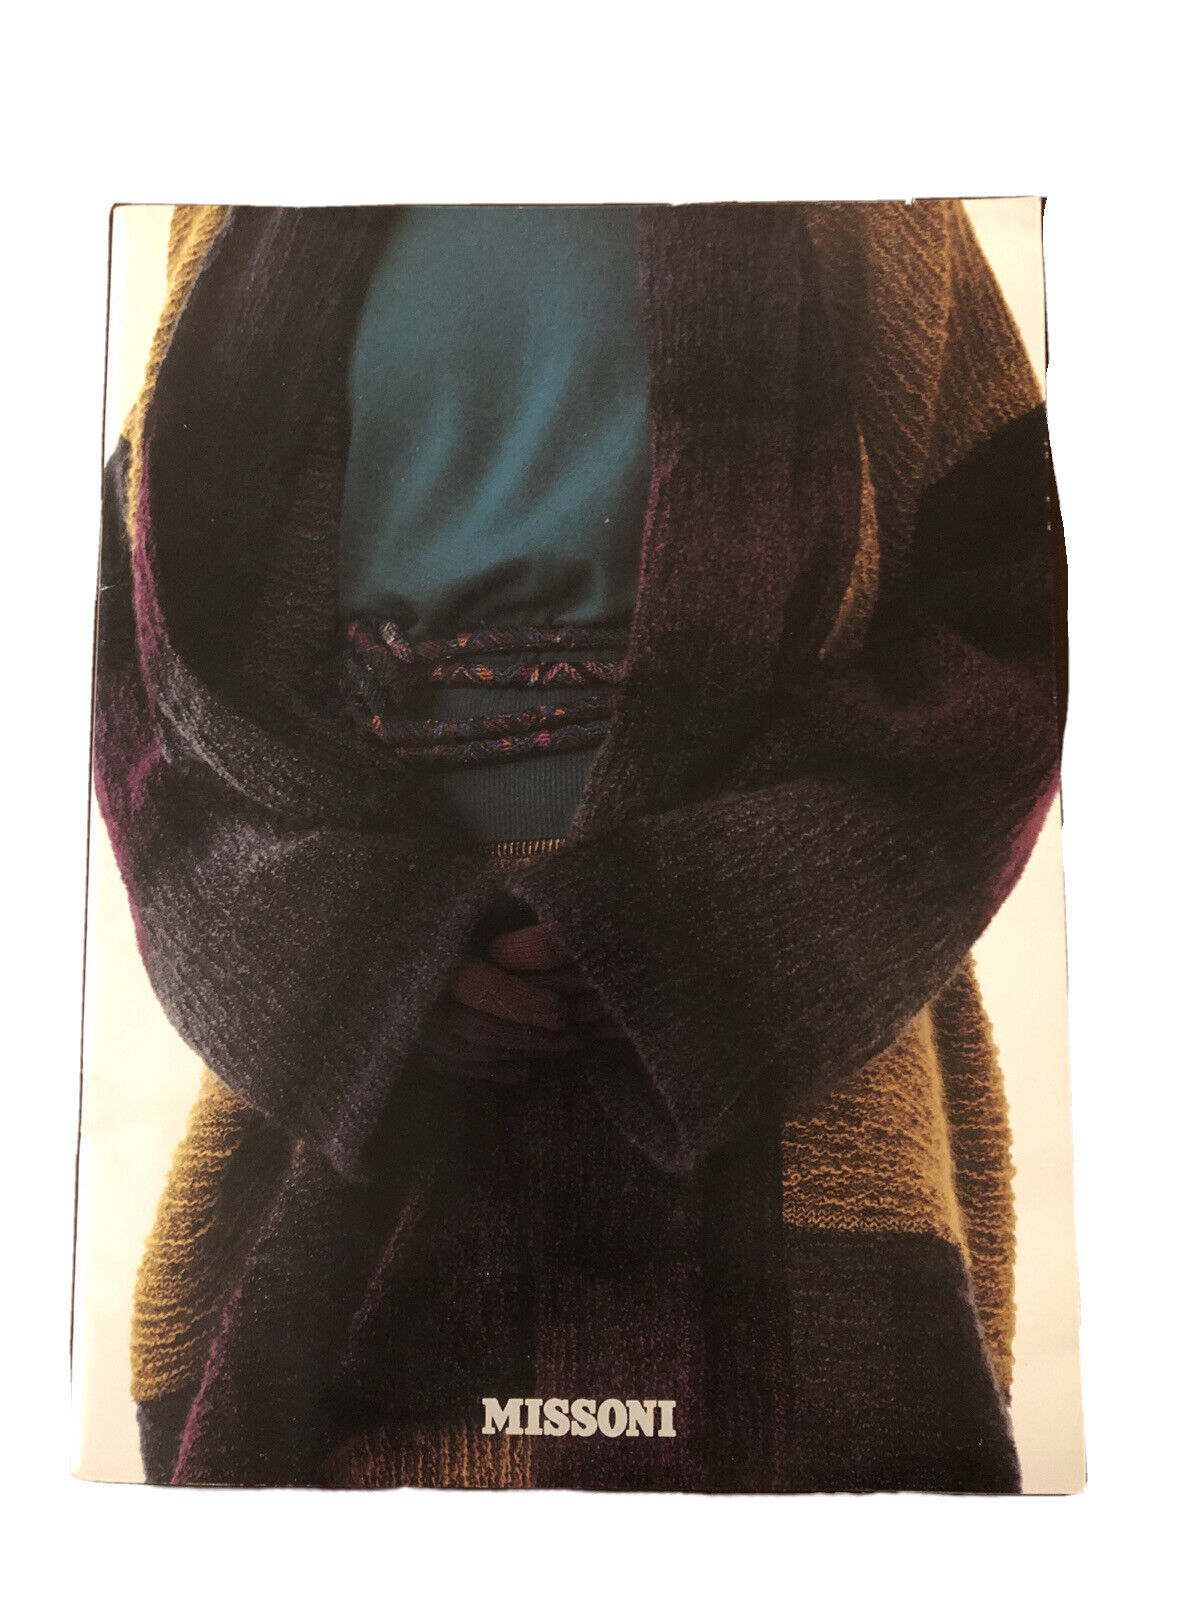 MISSONI Vintage 1989/1990 Fall Winter Collection Catalog Fashion Lookbook